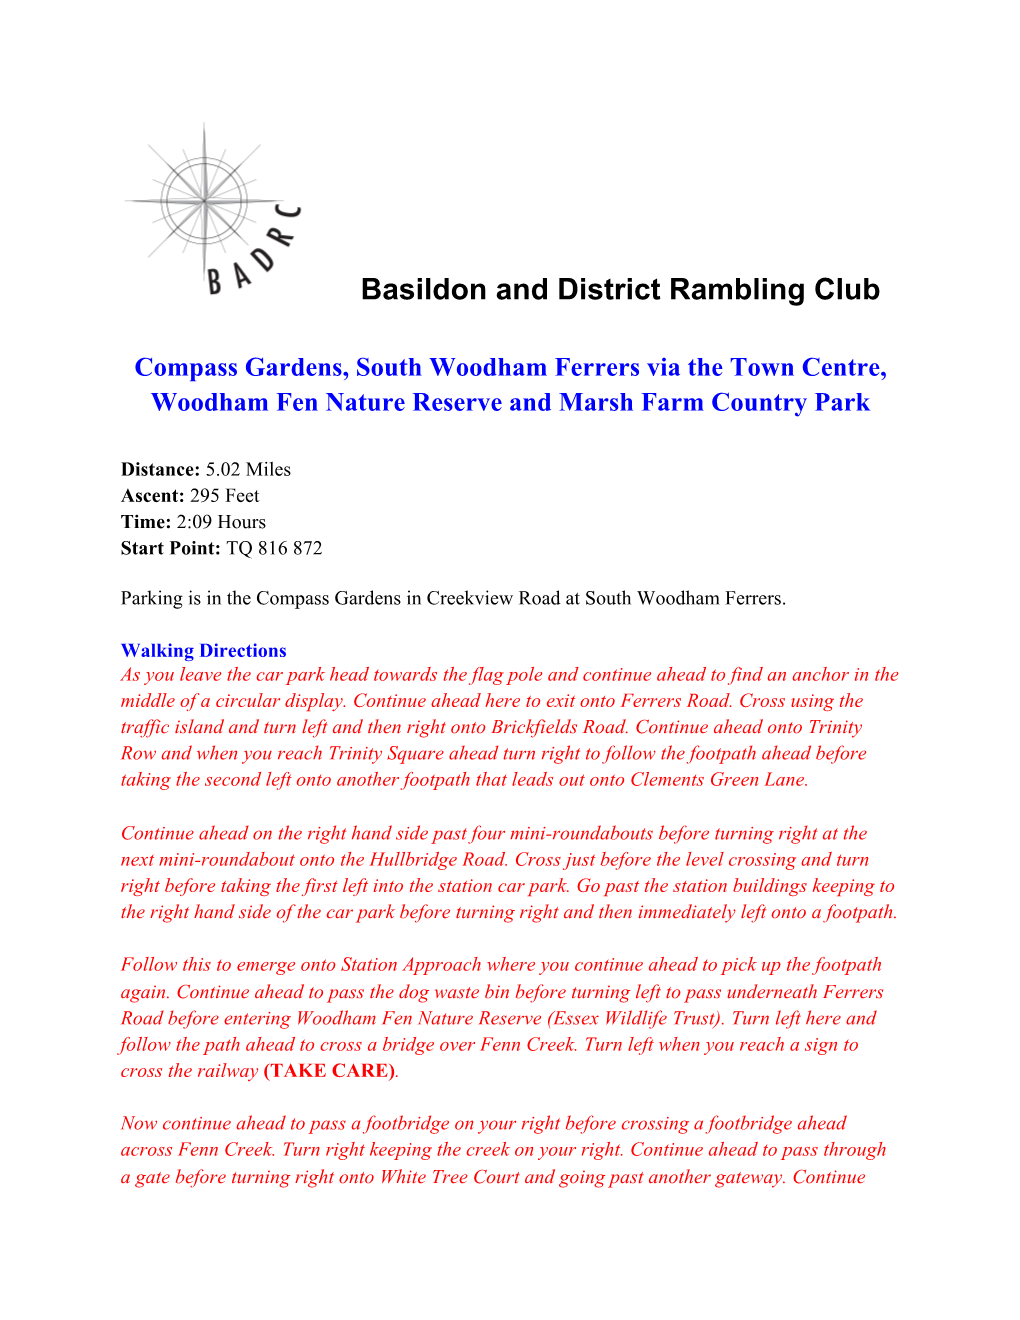 Basildon and District Rambling Club Compass Gardens, South